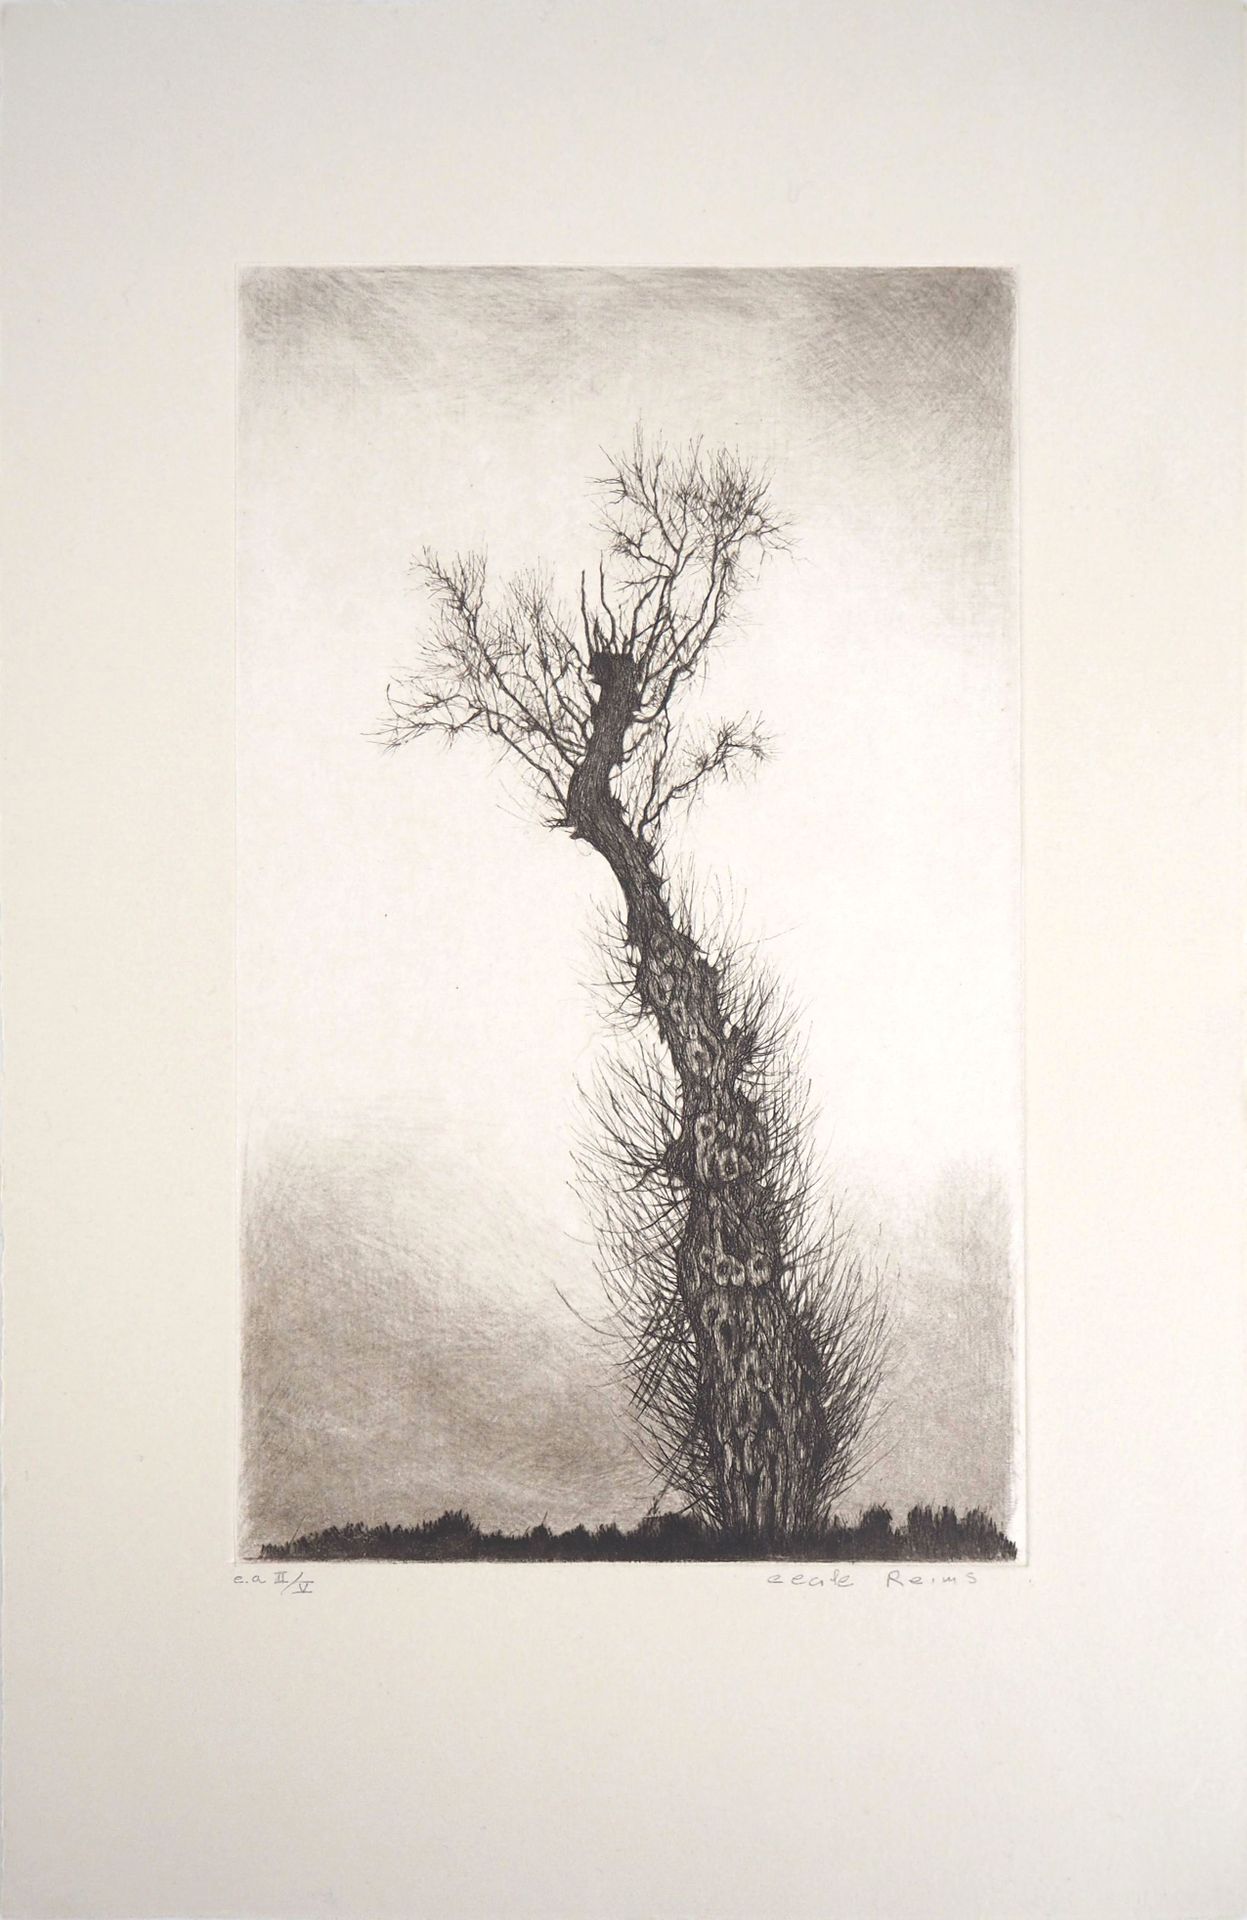 Cécile REIMS Cecile REIMS

被遗弃的树

原始干点蚀刻画

用铅笔签名

牛皮纸上 38 x 24,5 cm

合理的E.A.

 编&hellip;